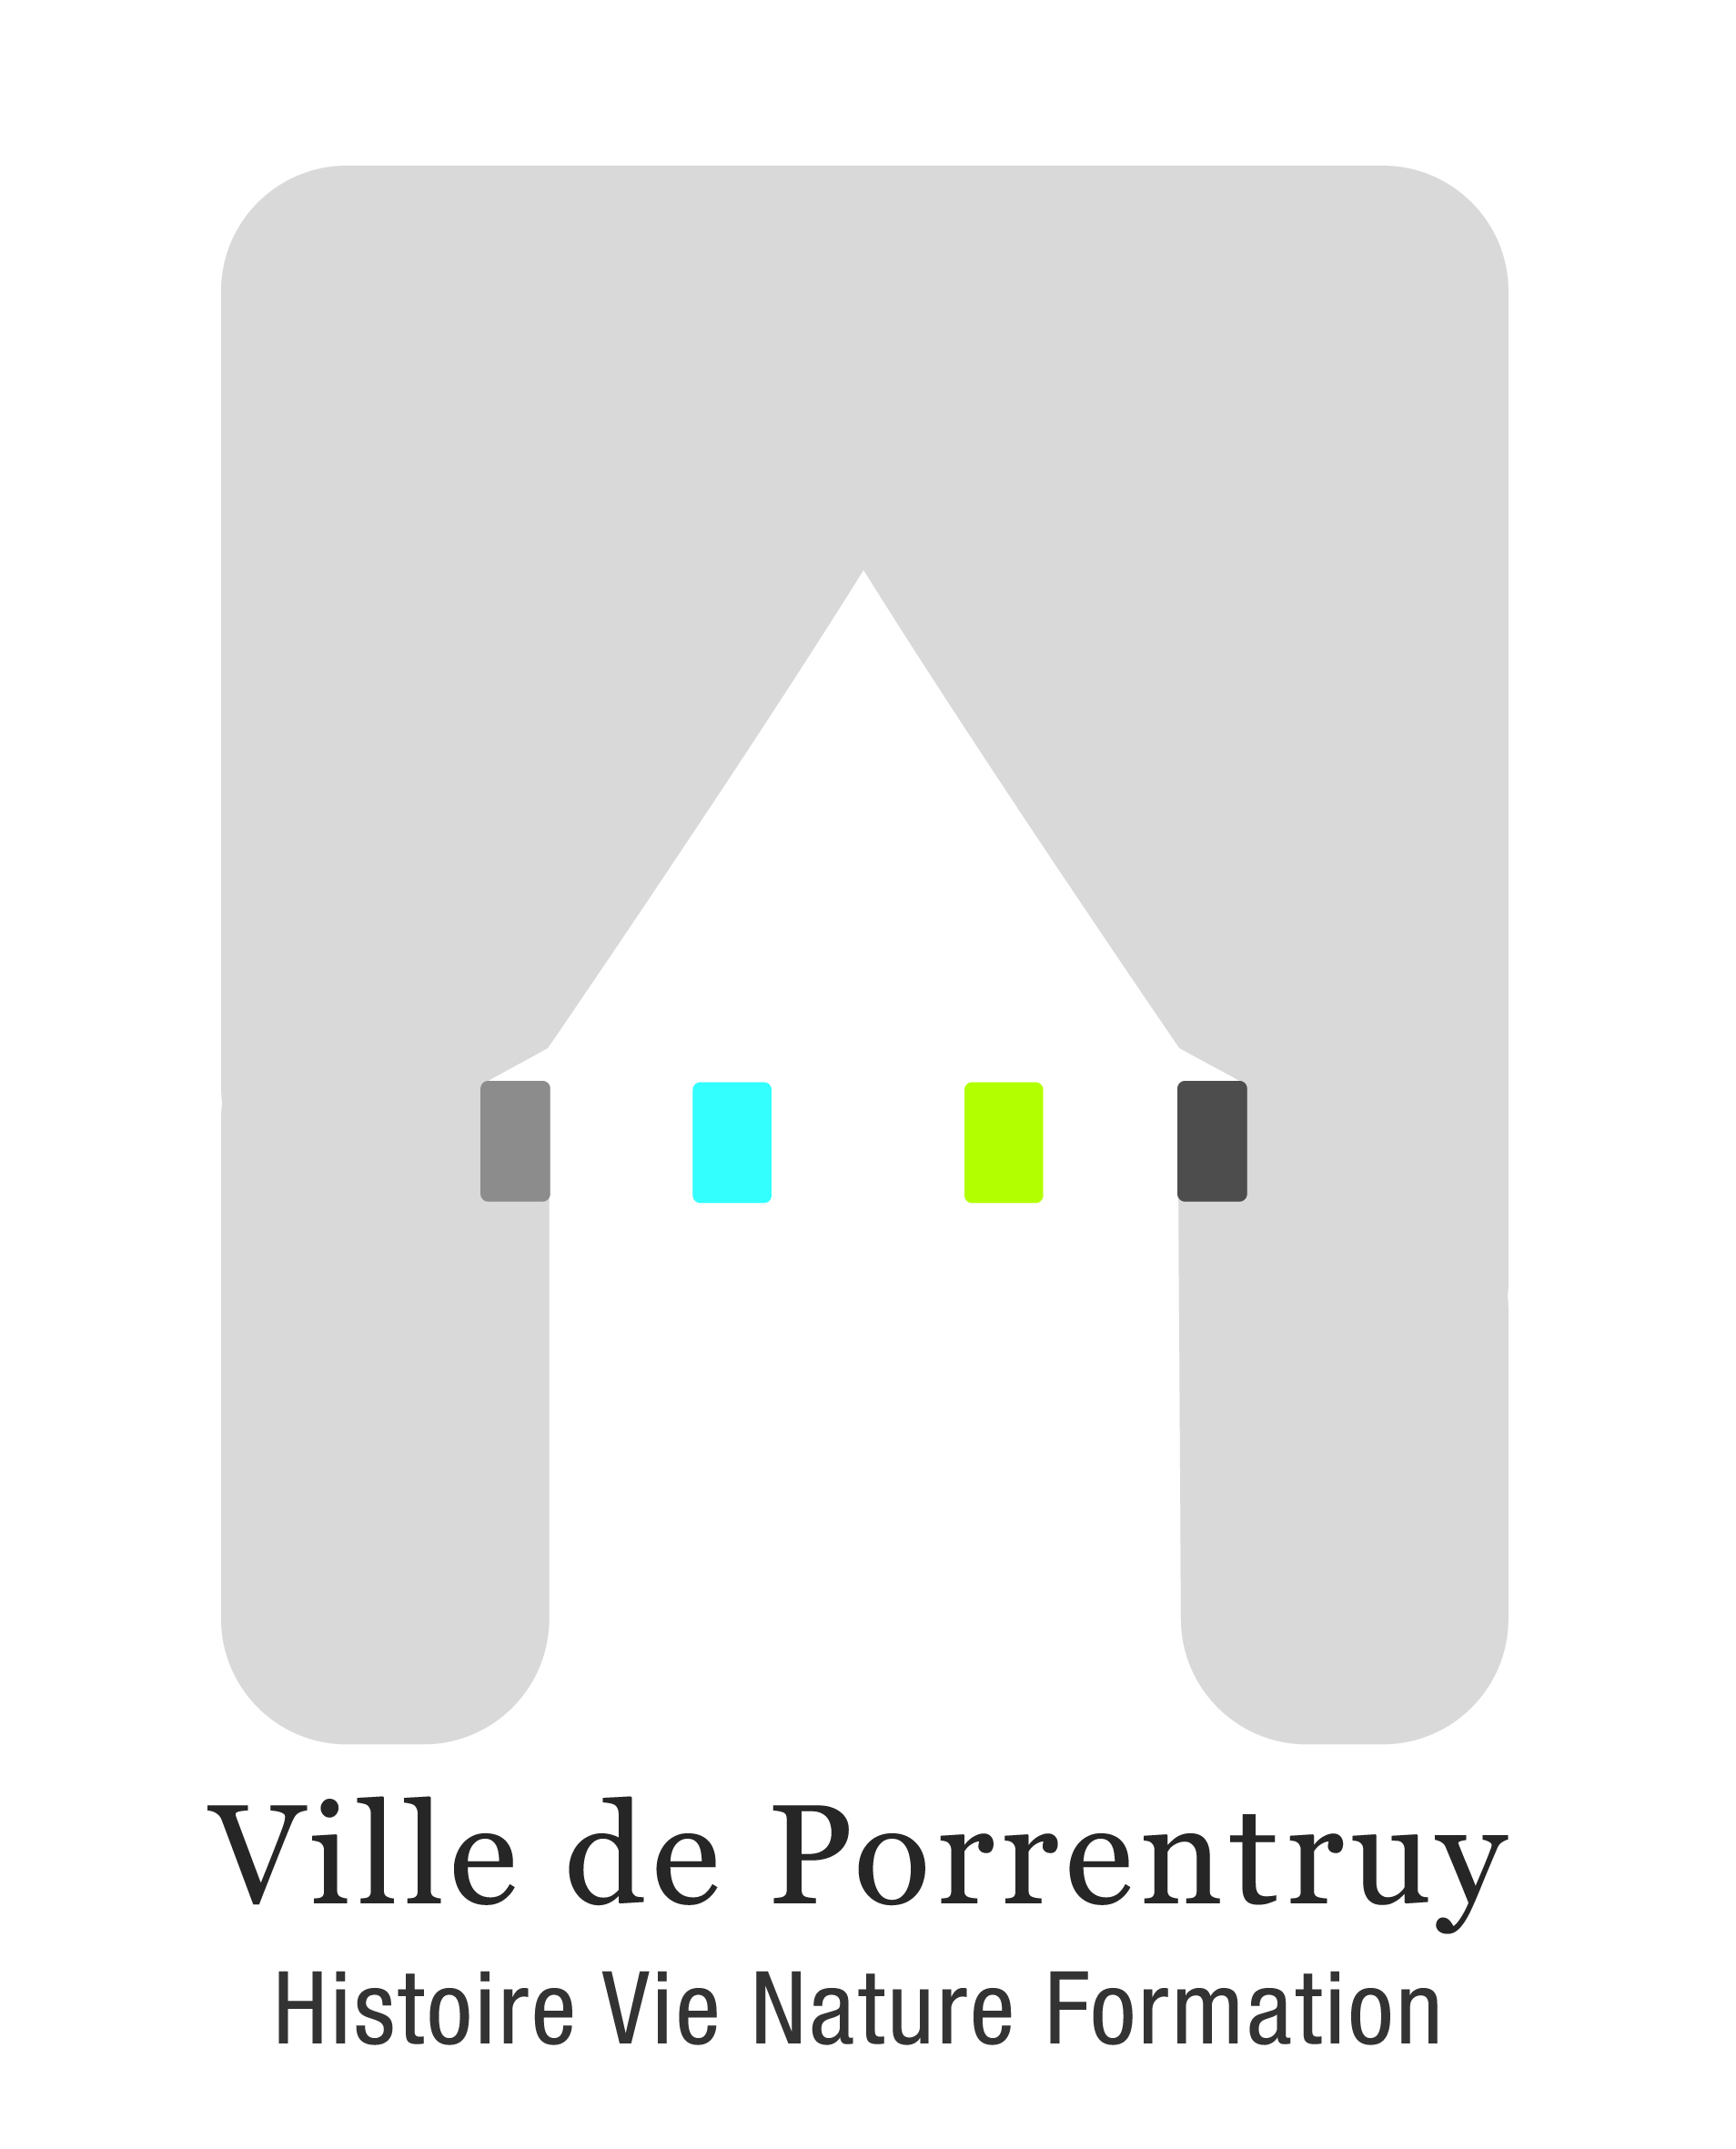 Ville de Porrentruy